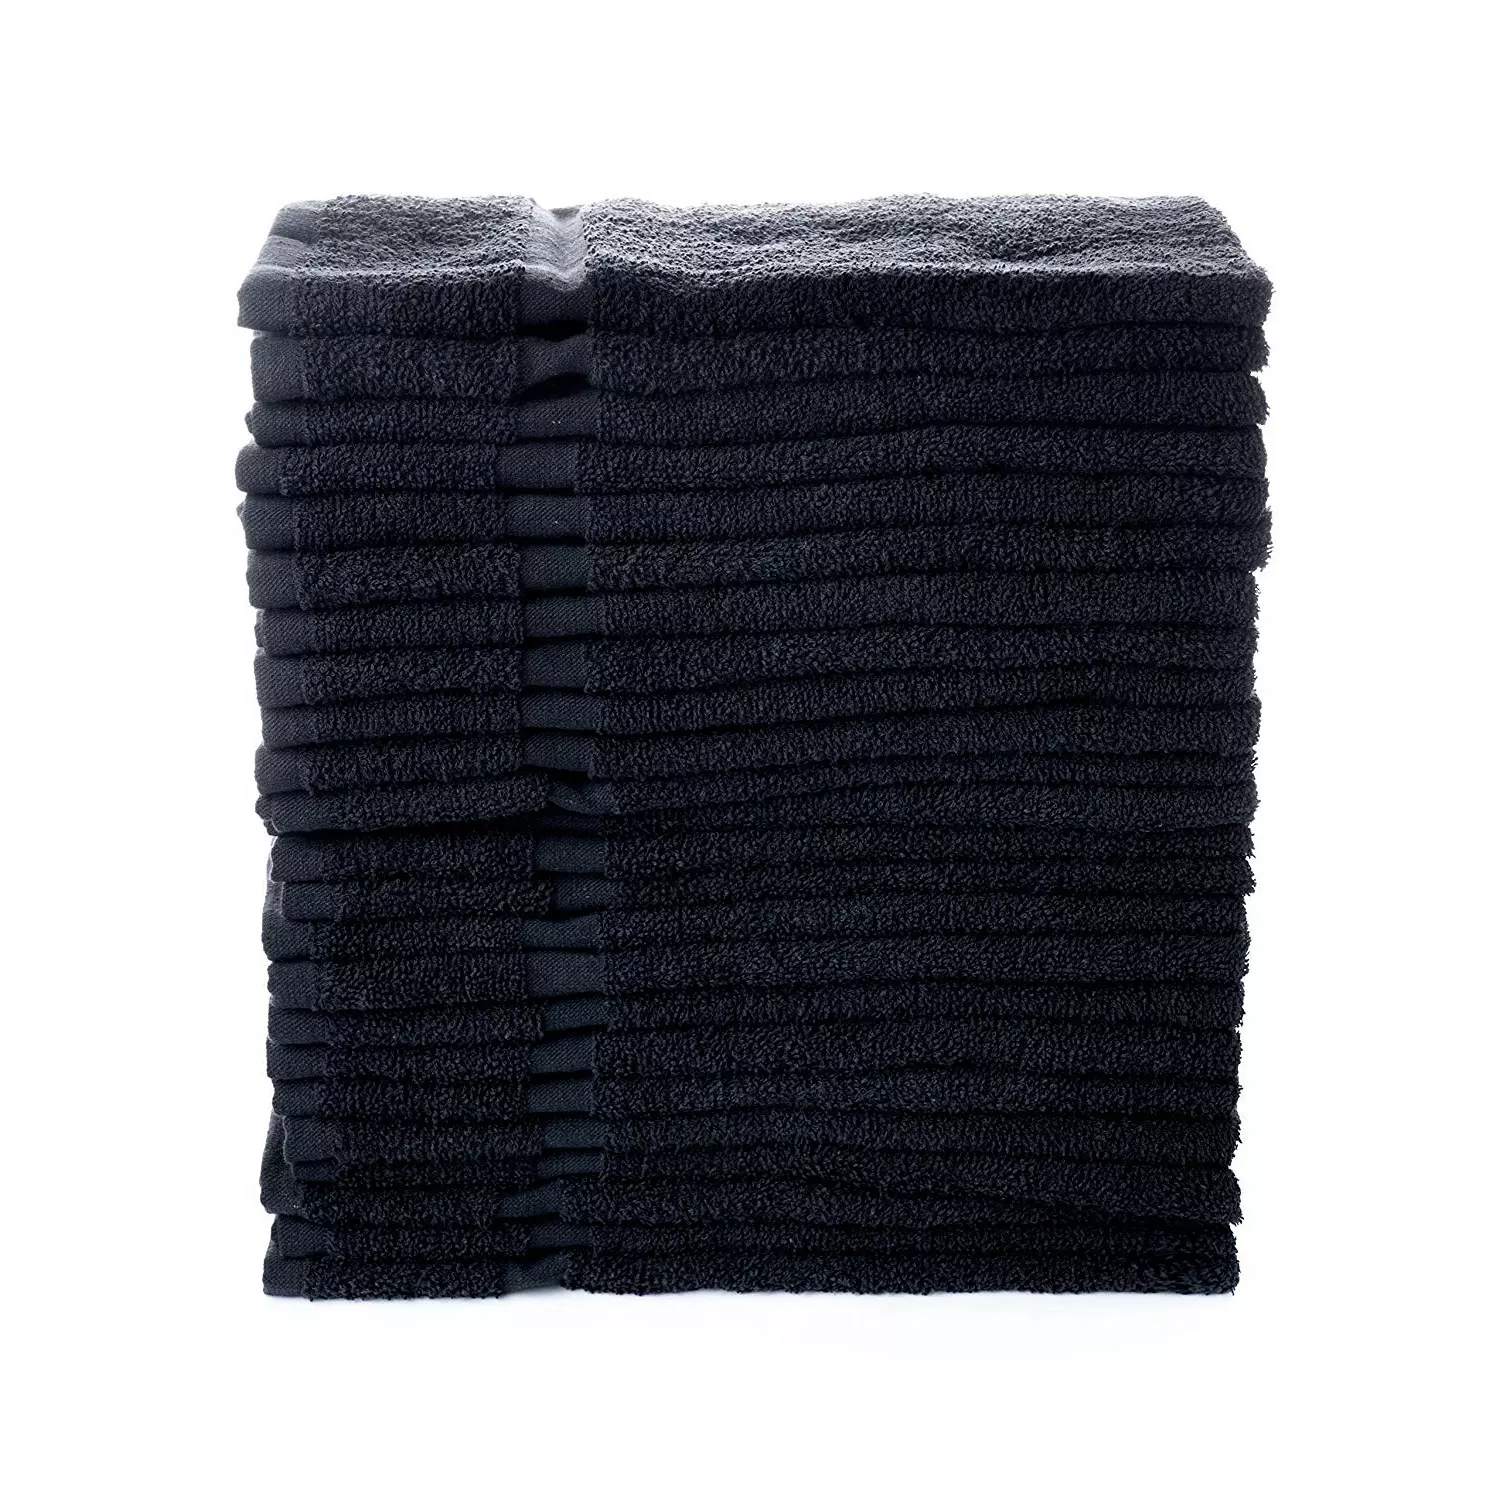 Hometex Cotton Lightweight Hand Towels